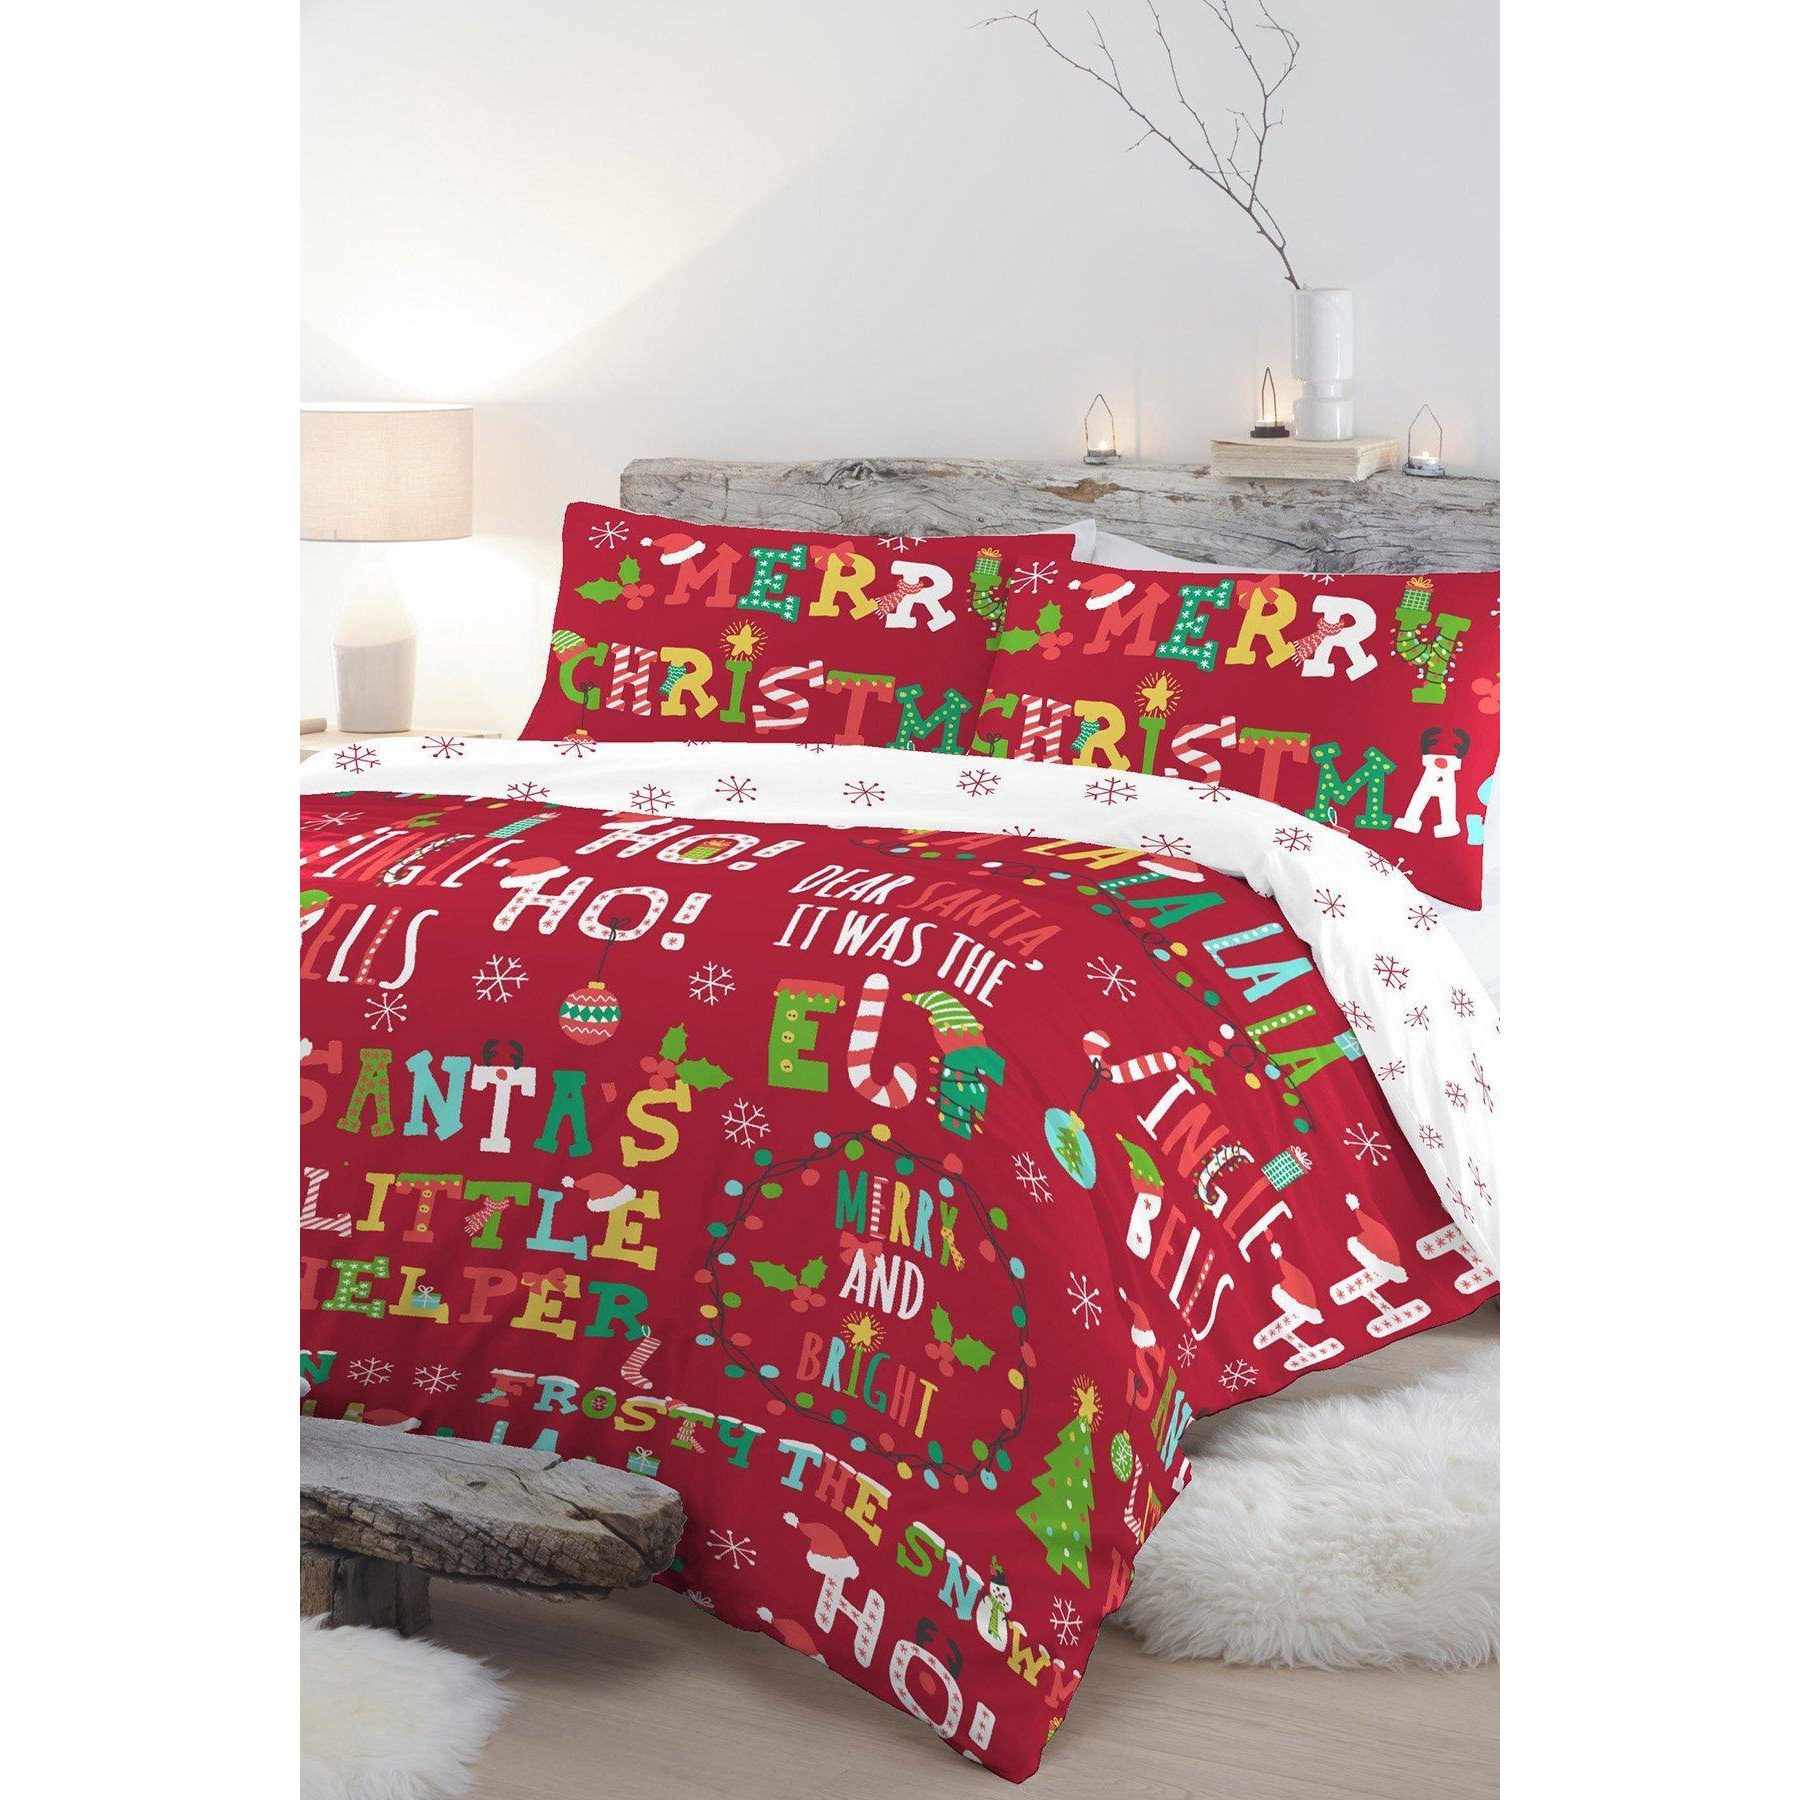 'Santa's Little Helper' Text Crazy Festive Print Duvet Cover Set - image 1